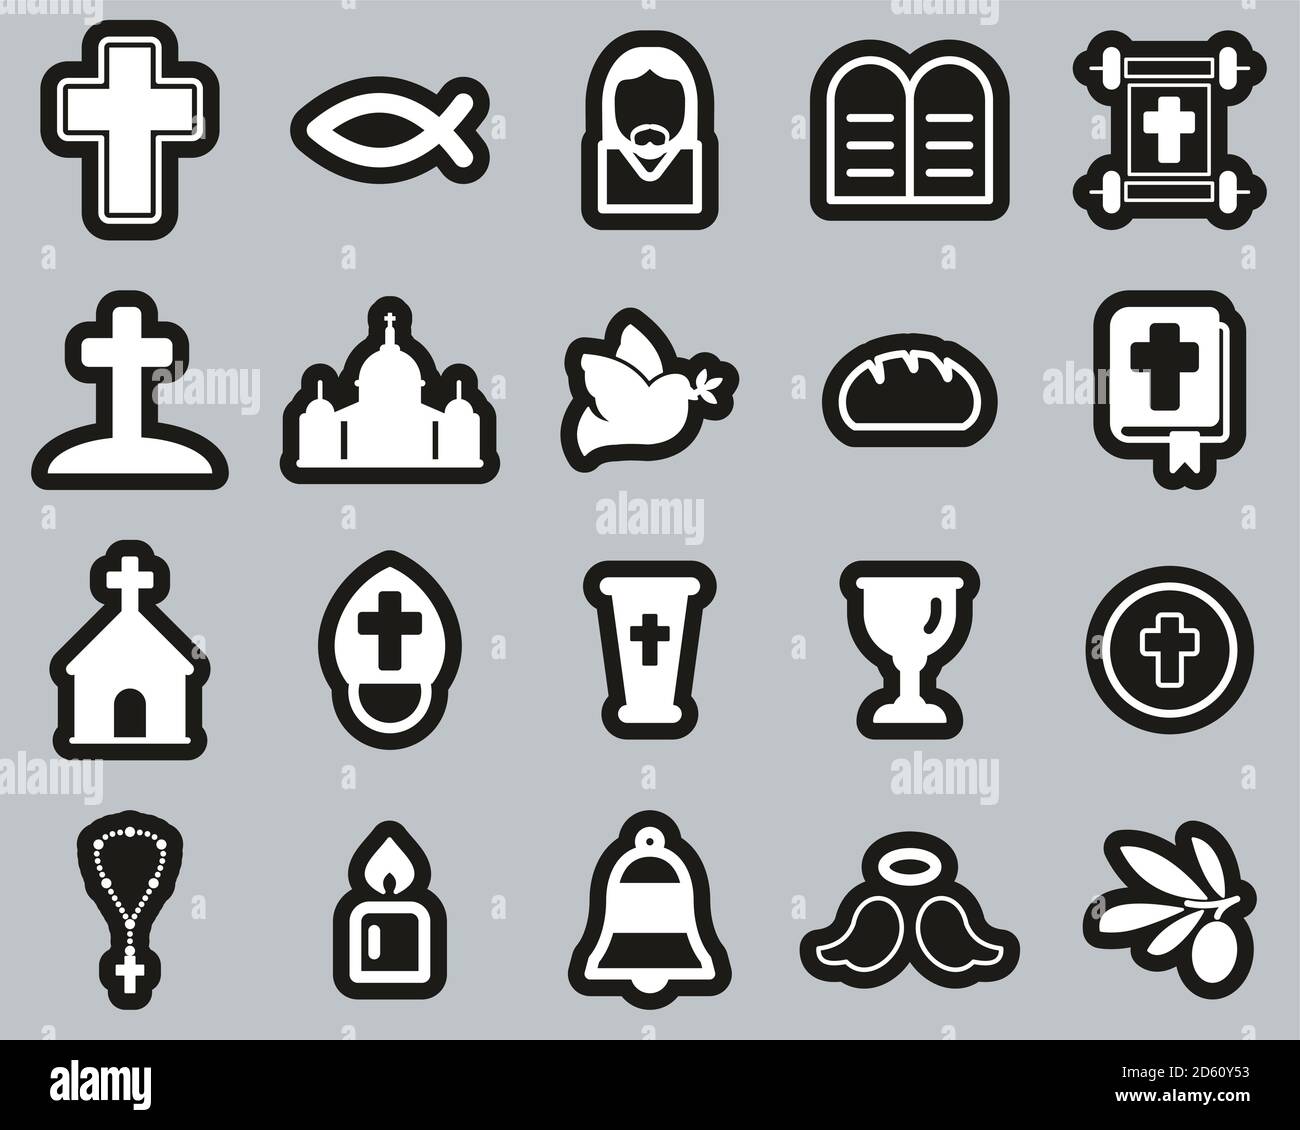 Christianity Religion & Religious Items Icons White On Black Sticker Set Big Stock Vector